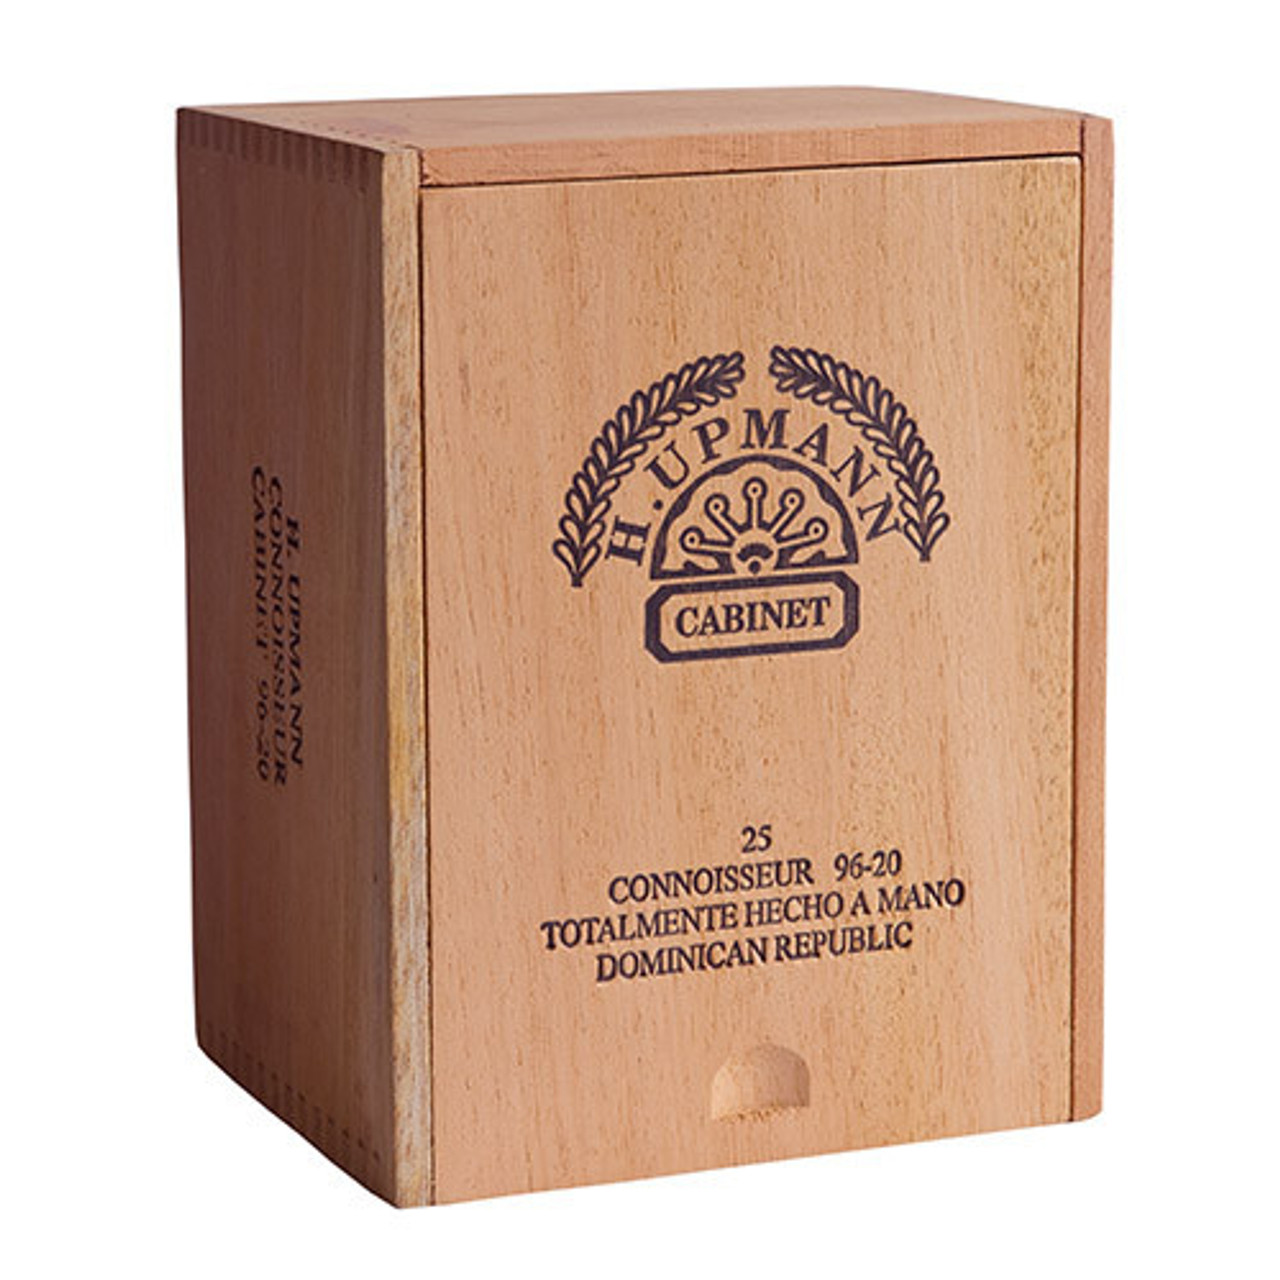 H. Upmann Connoisseur Cabinet 01-40 Cigars - 5 x 50 (Box of 25) *Box